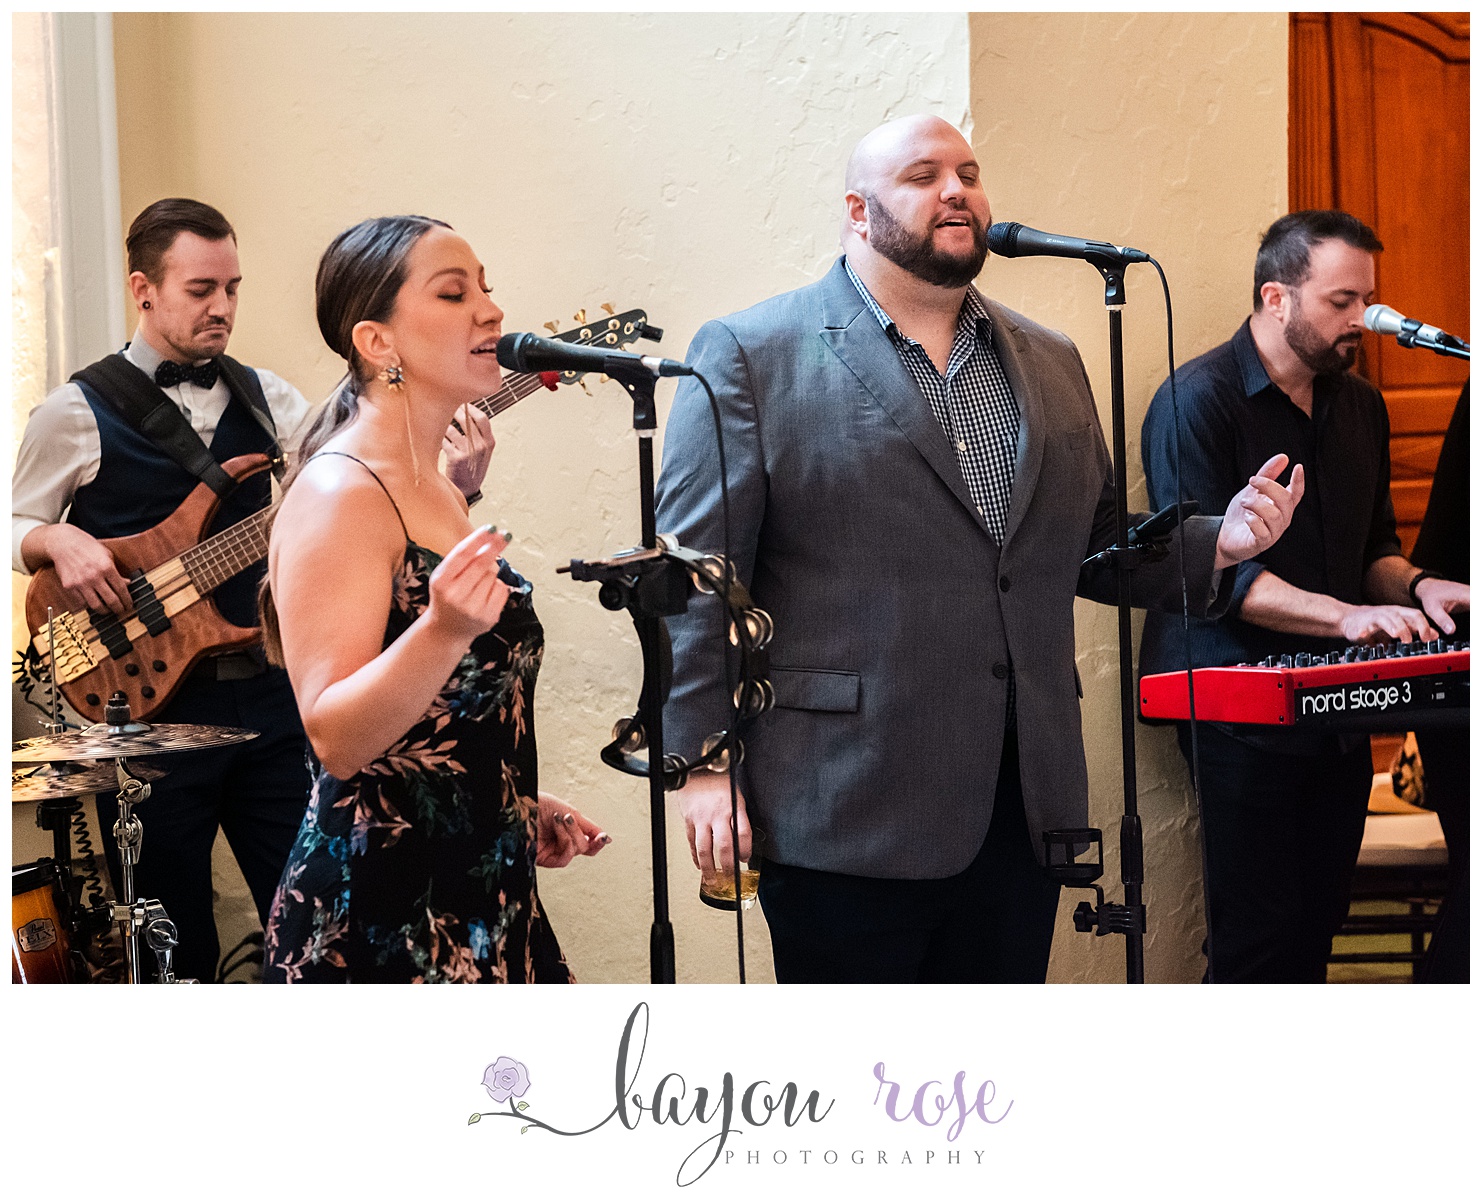 Capital City Soul band performing at Latrobe's on Royal wedding